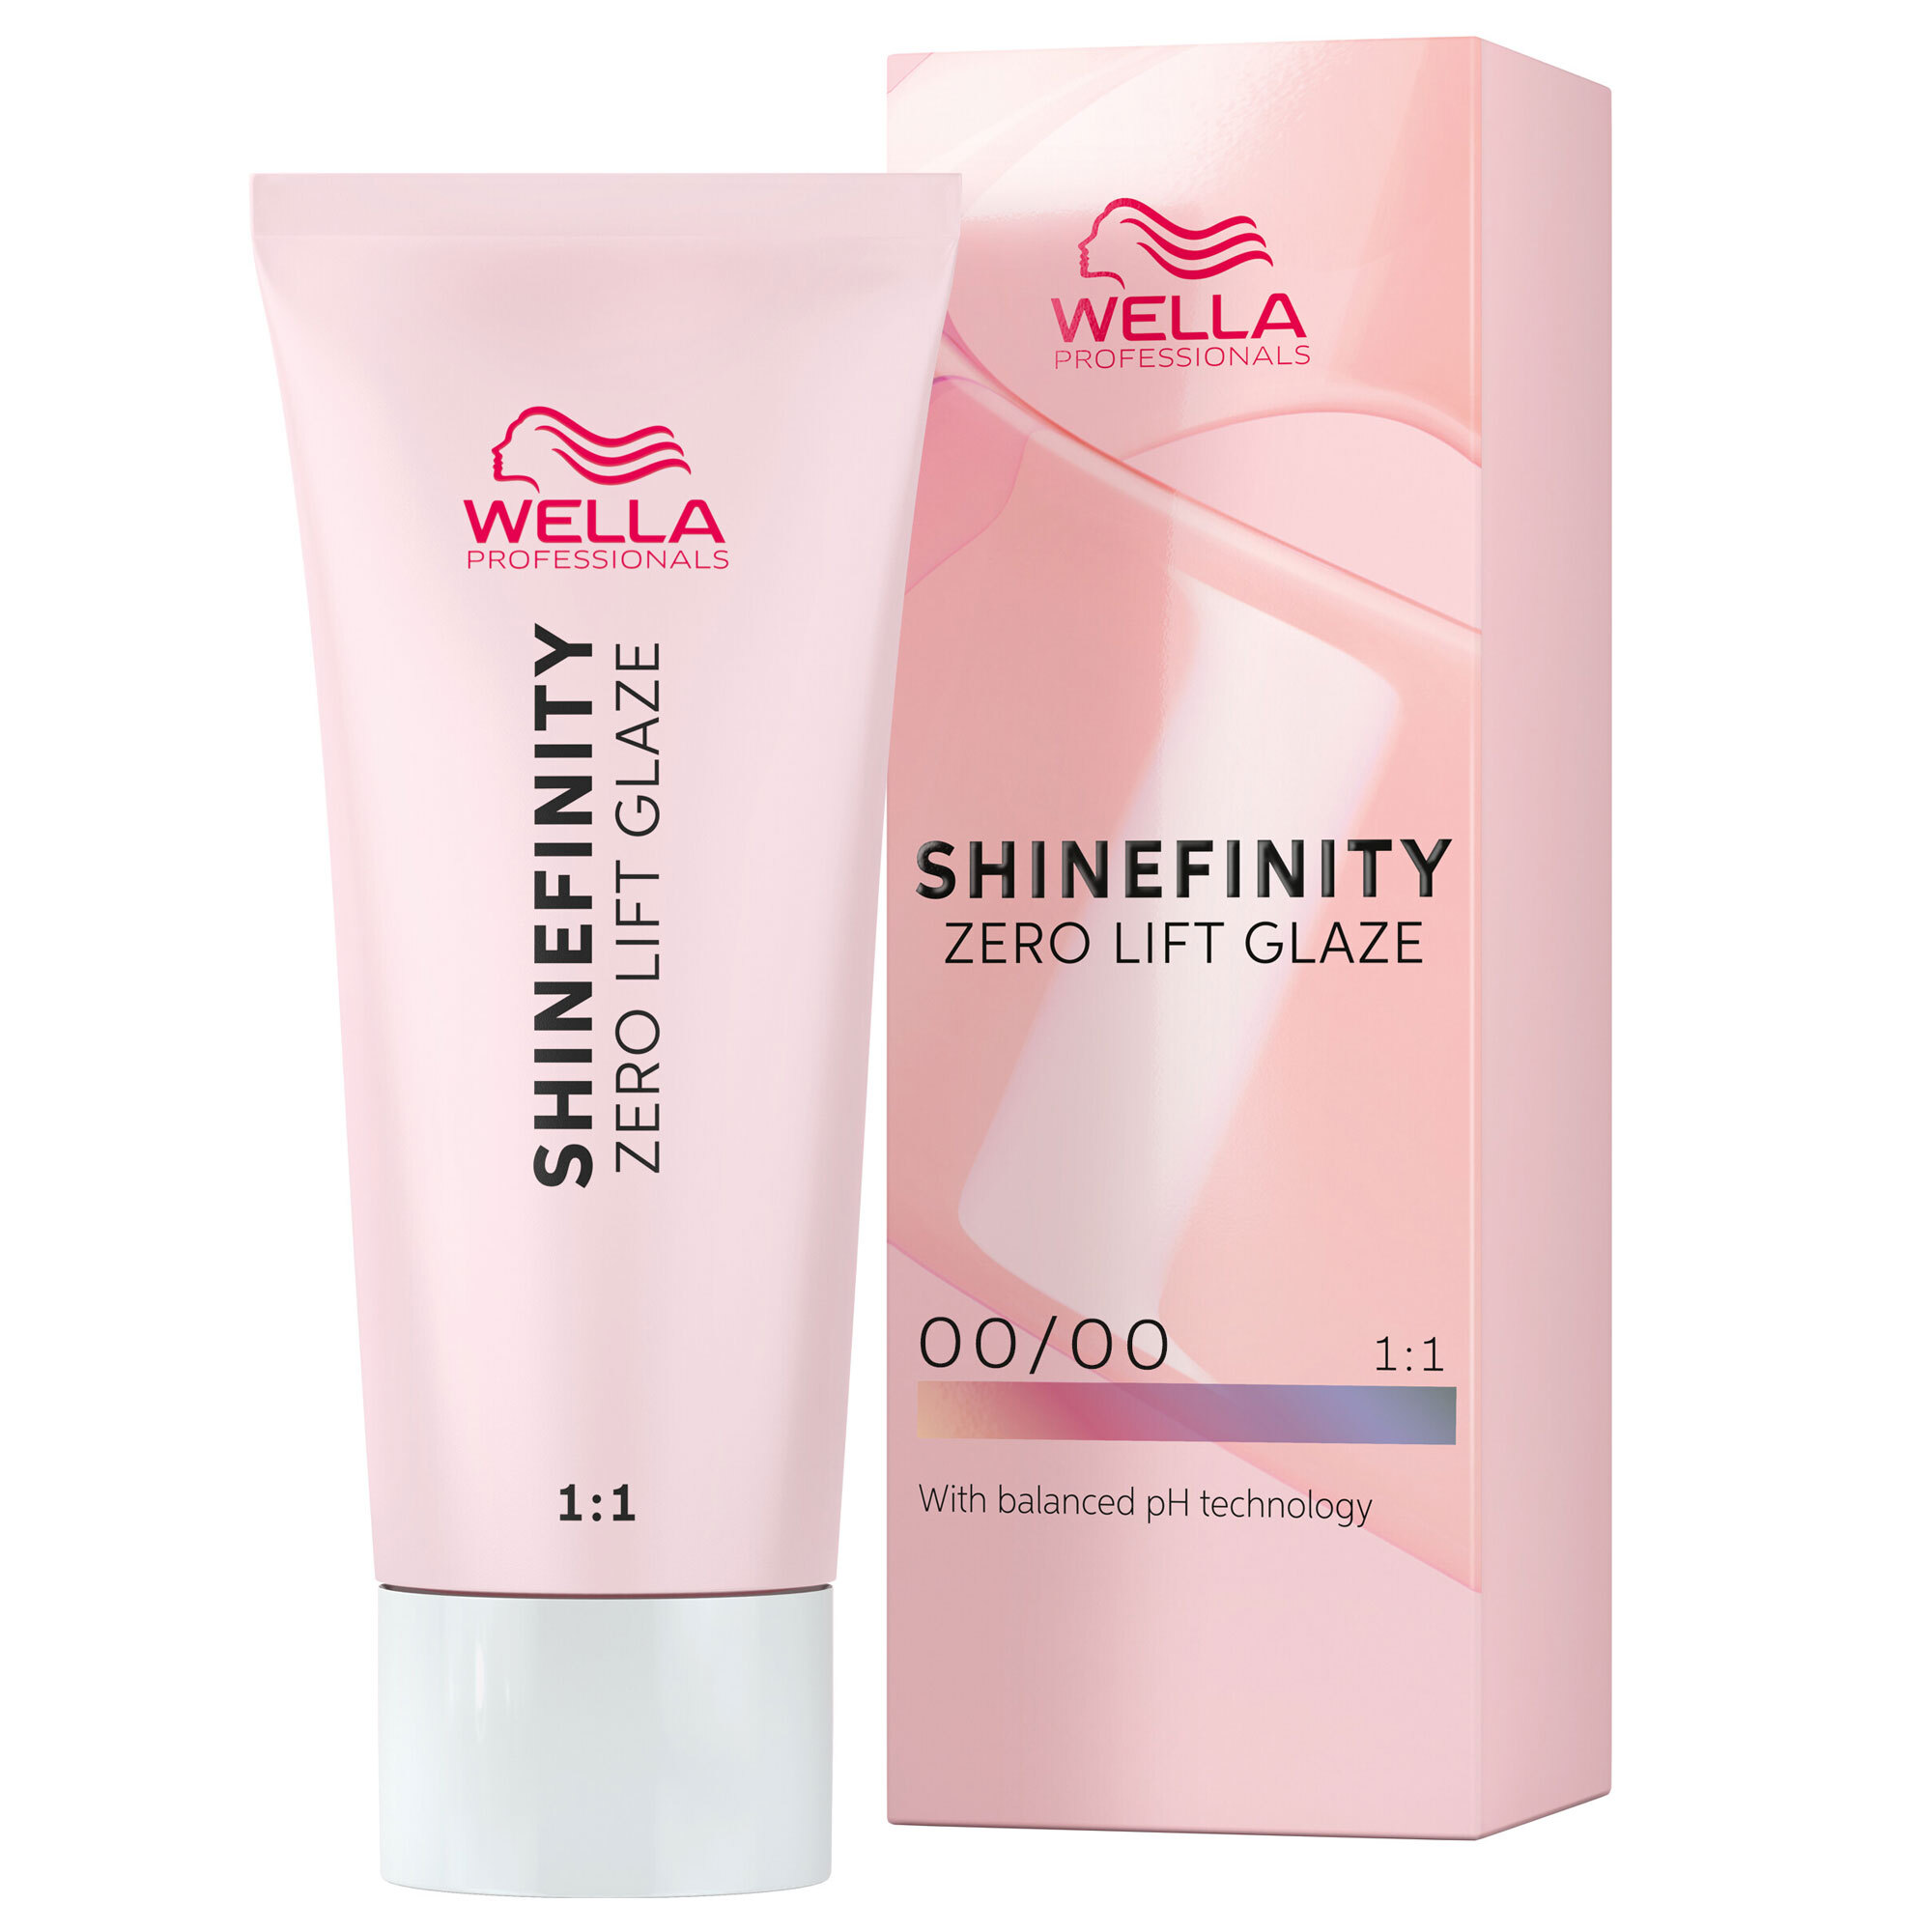 Wella Shinefinity Color Glaze - 00/00 Clear